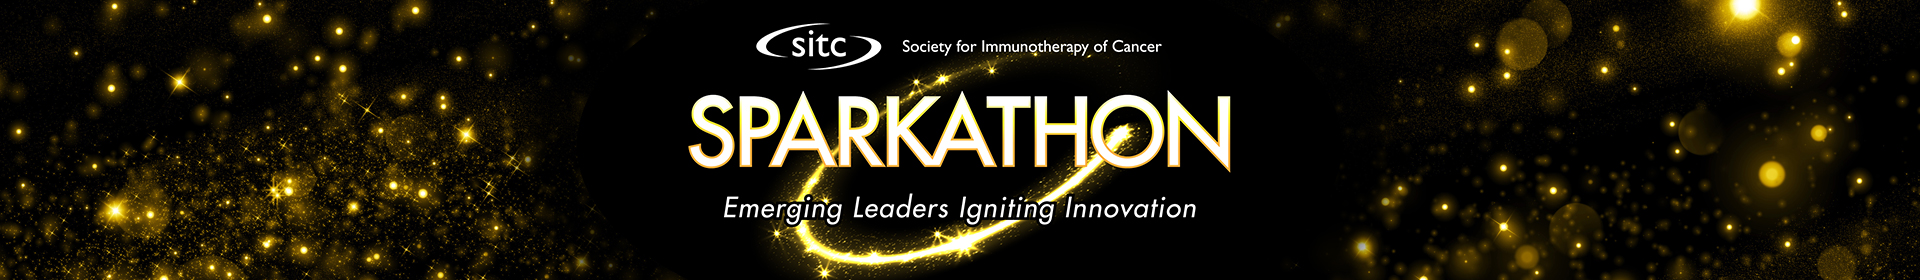 SITC Sparkathon Accelerator: Emerging Leaders Igniting Innovation